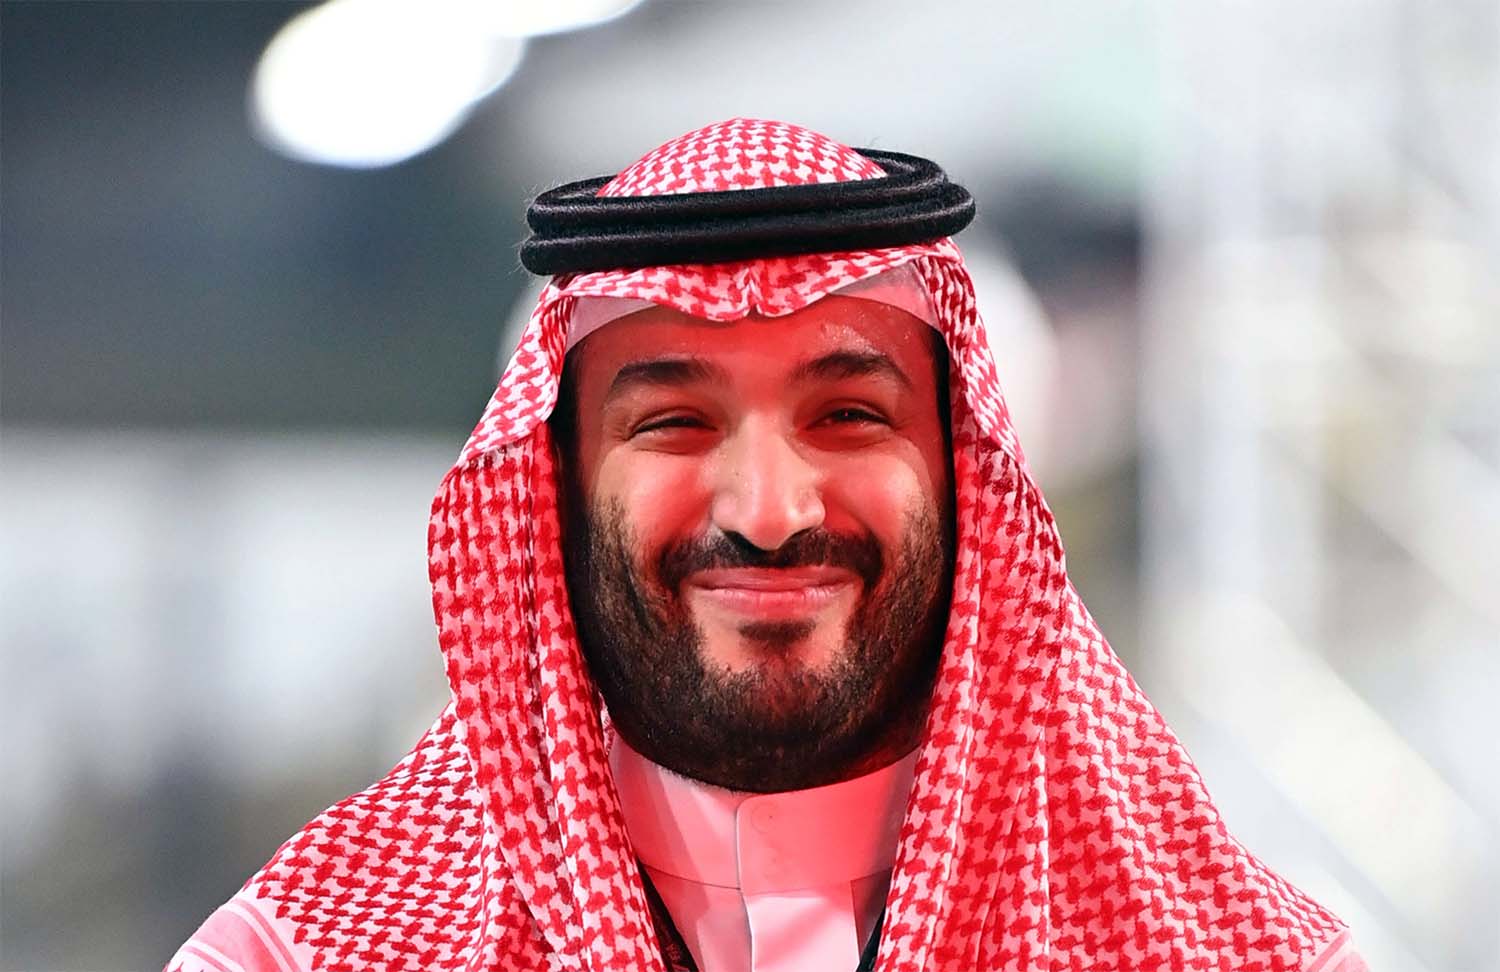 The summit of Gulf Arab leaders would be held in Riyadh in mid-December